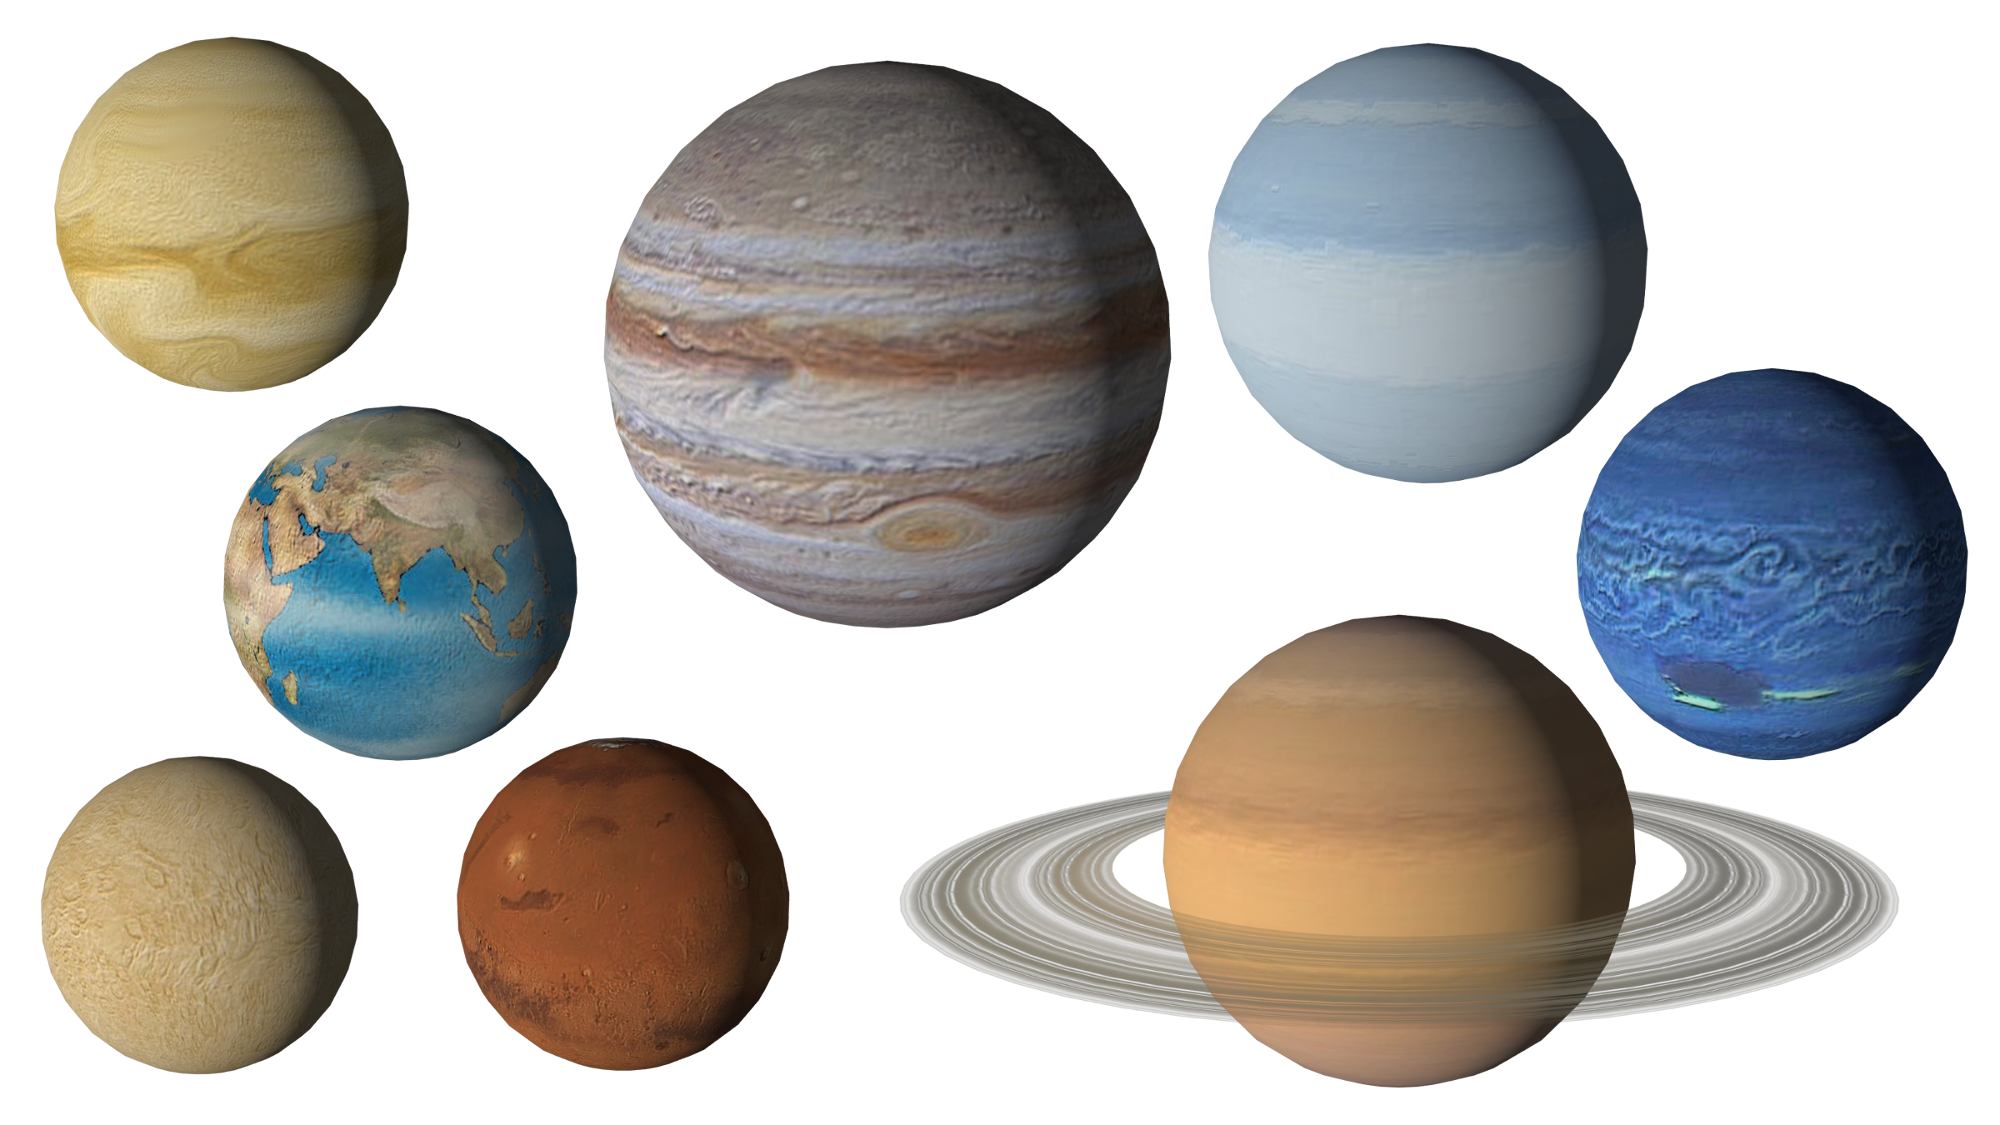 Solar System Explorer 3D